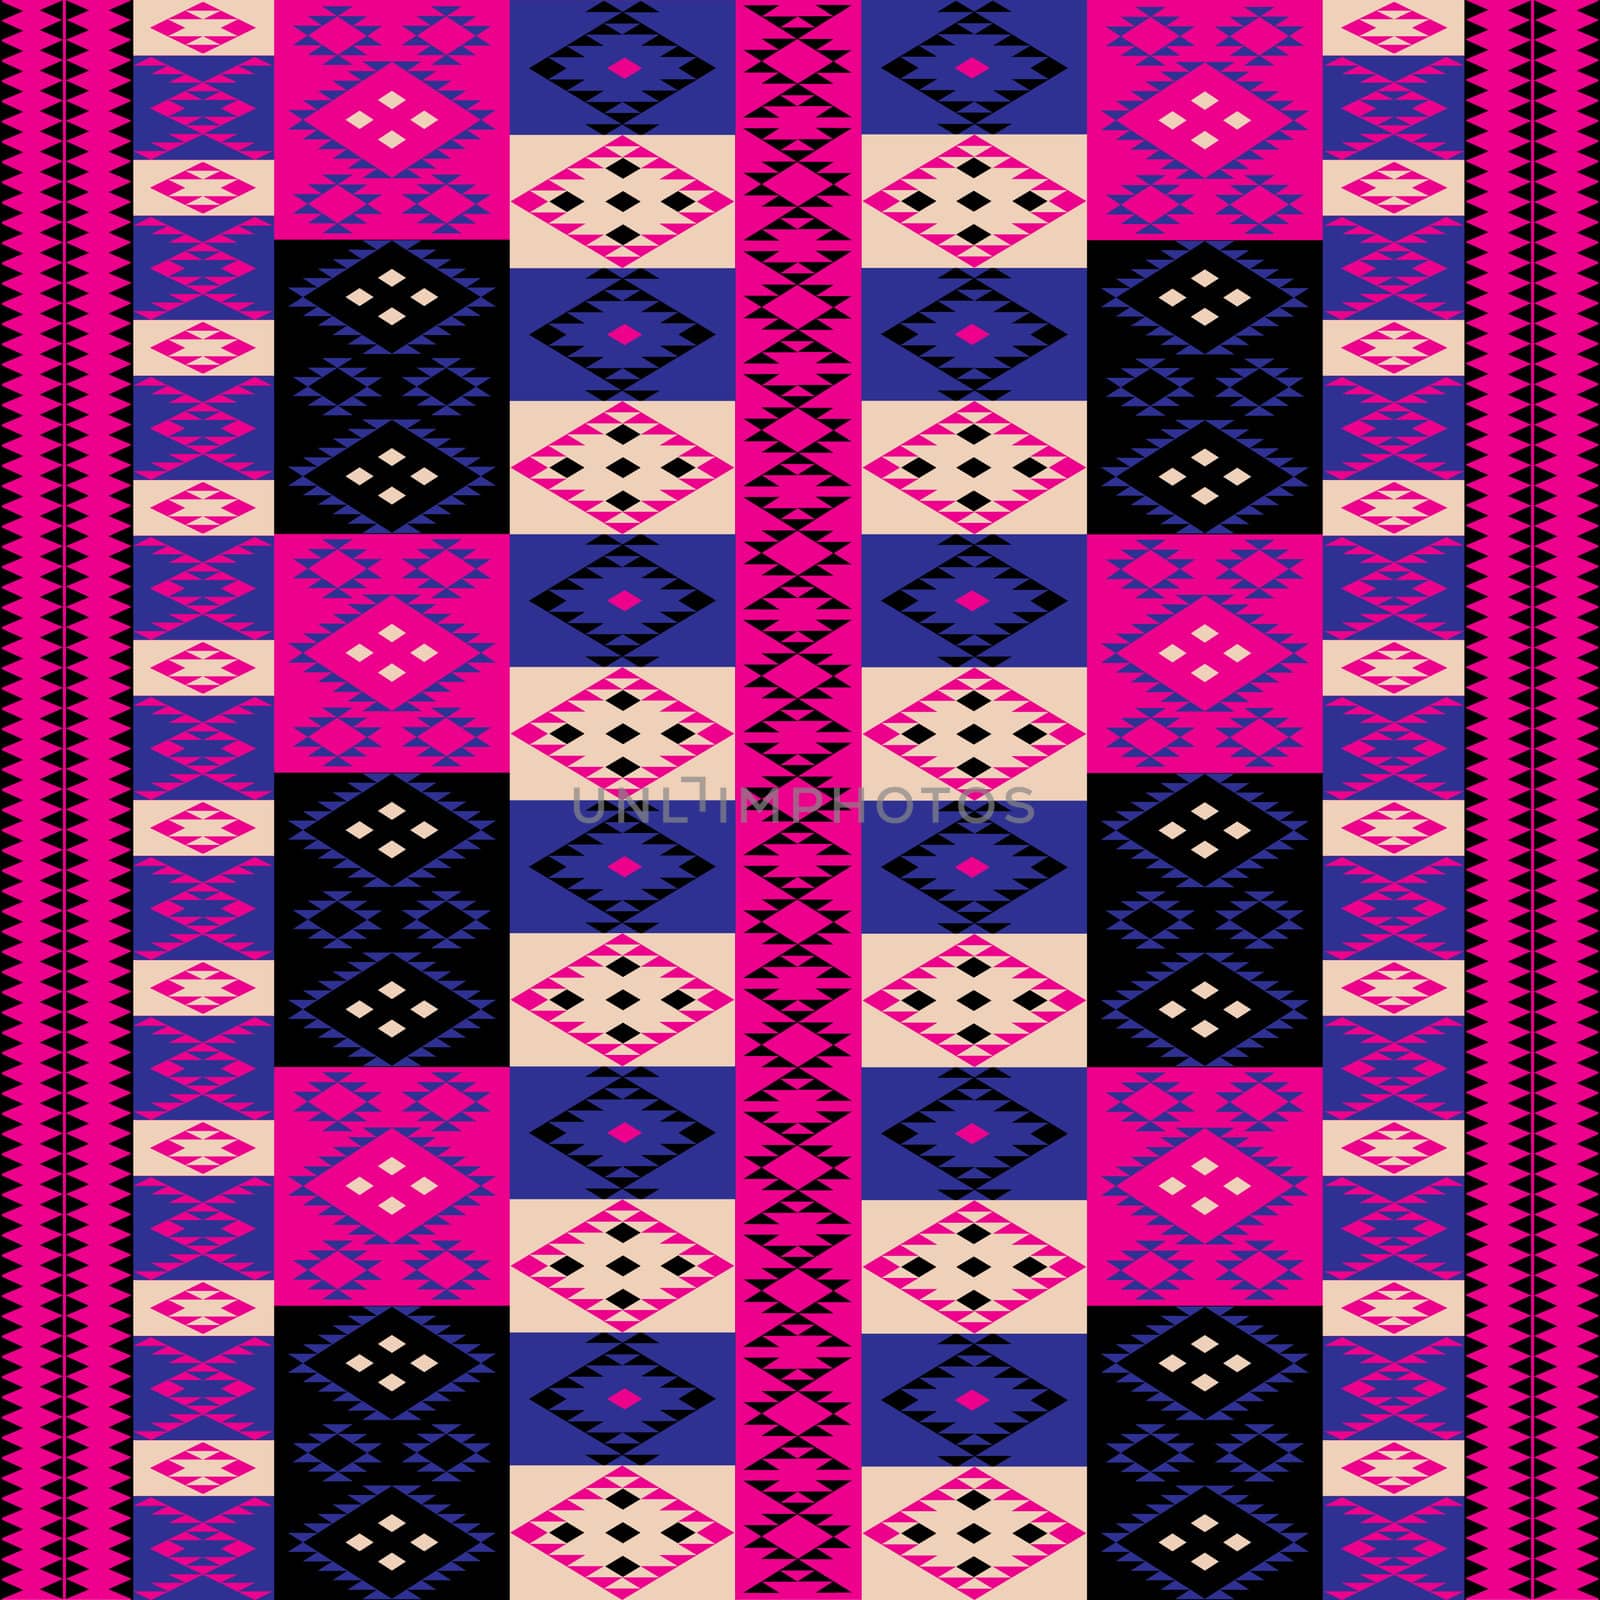 Pink ethnic motifs by hibrida13